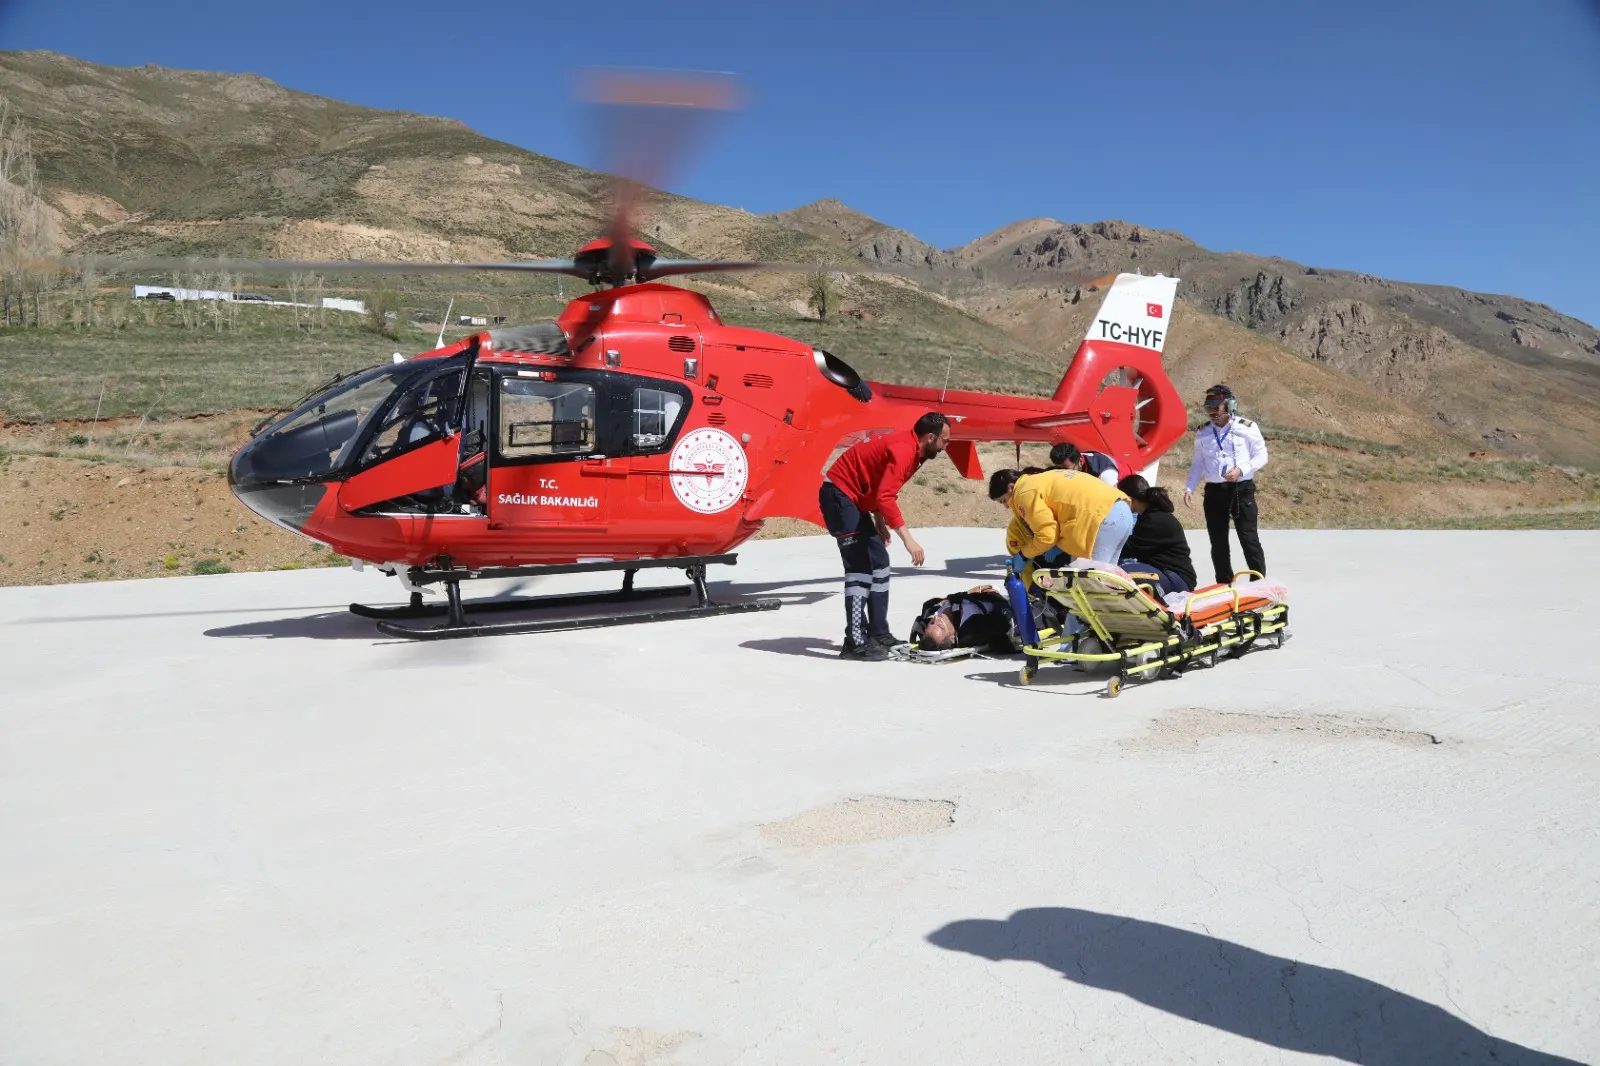 vanda kalp krizi geciren hastaya ambulans helikopterle sevk 2 vwi8ZfqX